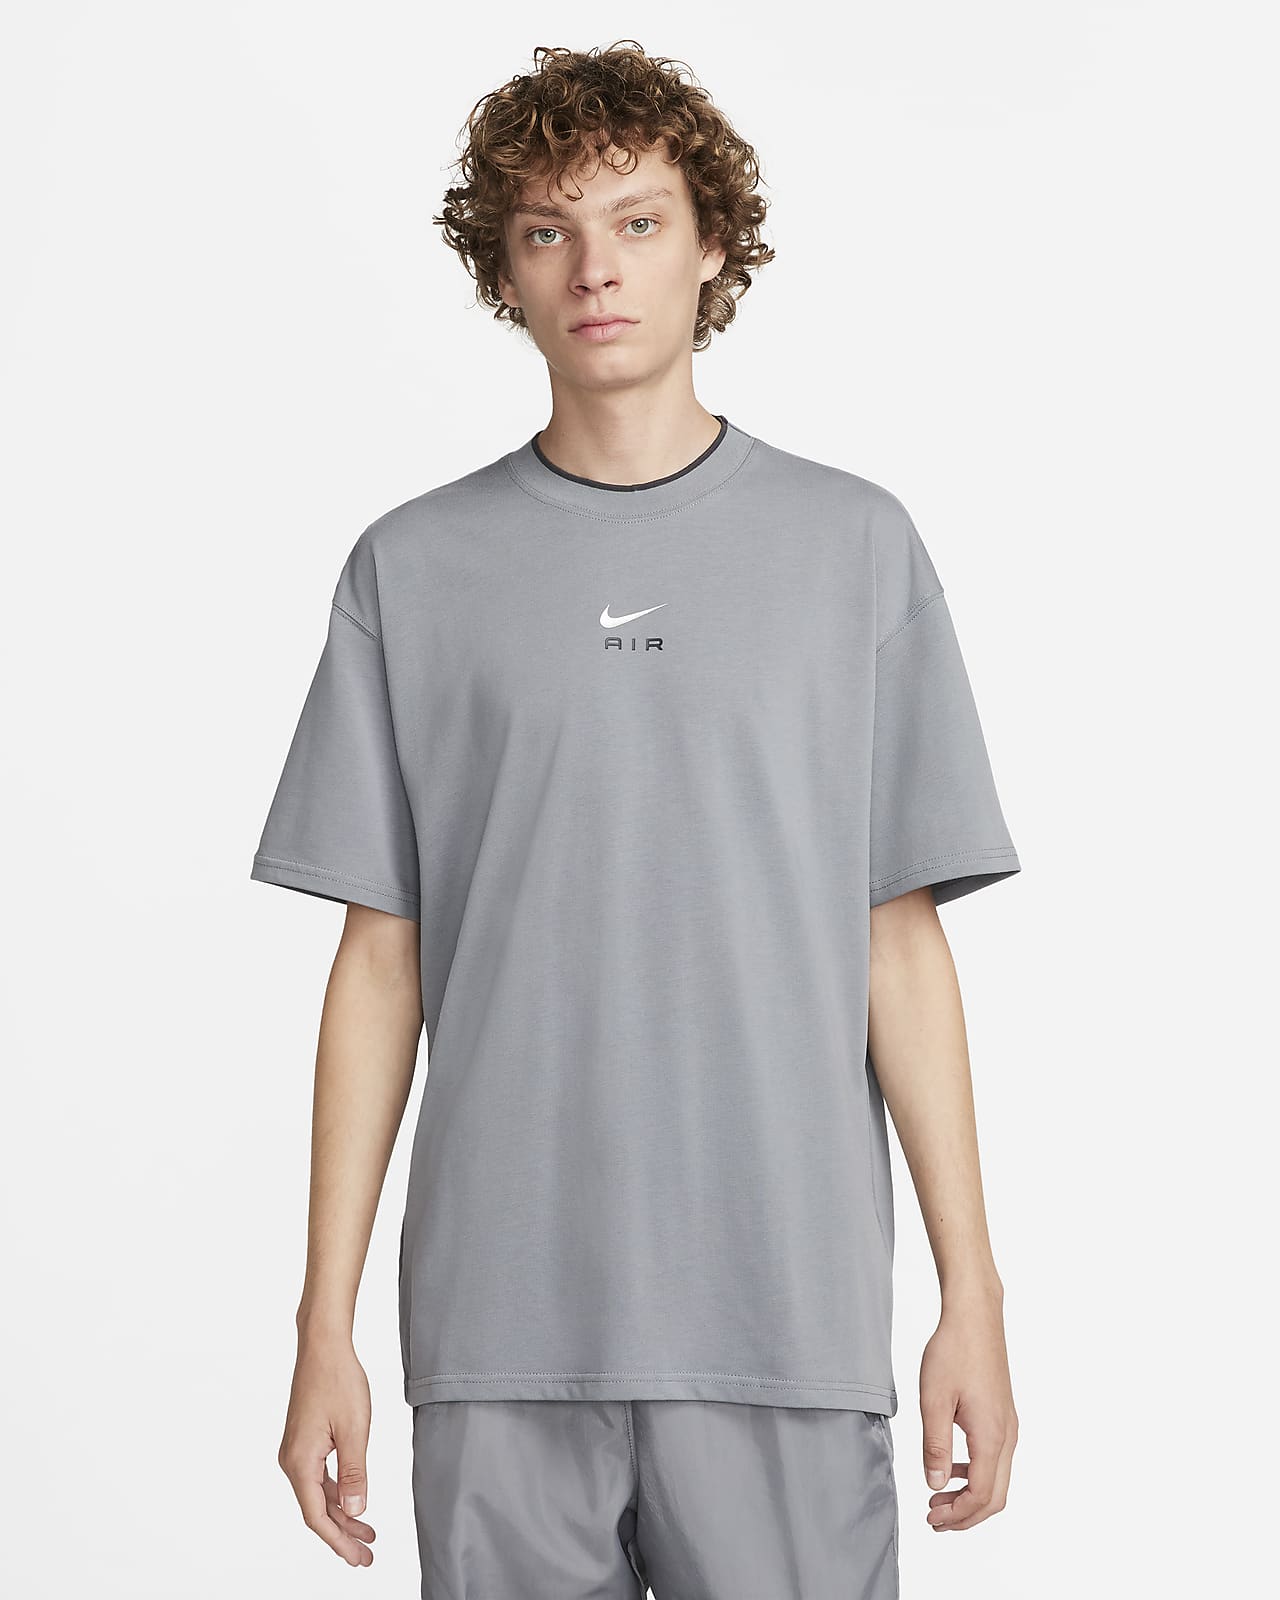 Nike Air Men's T-Shirt. Nike SI